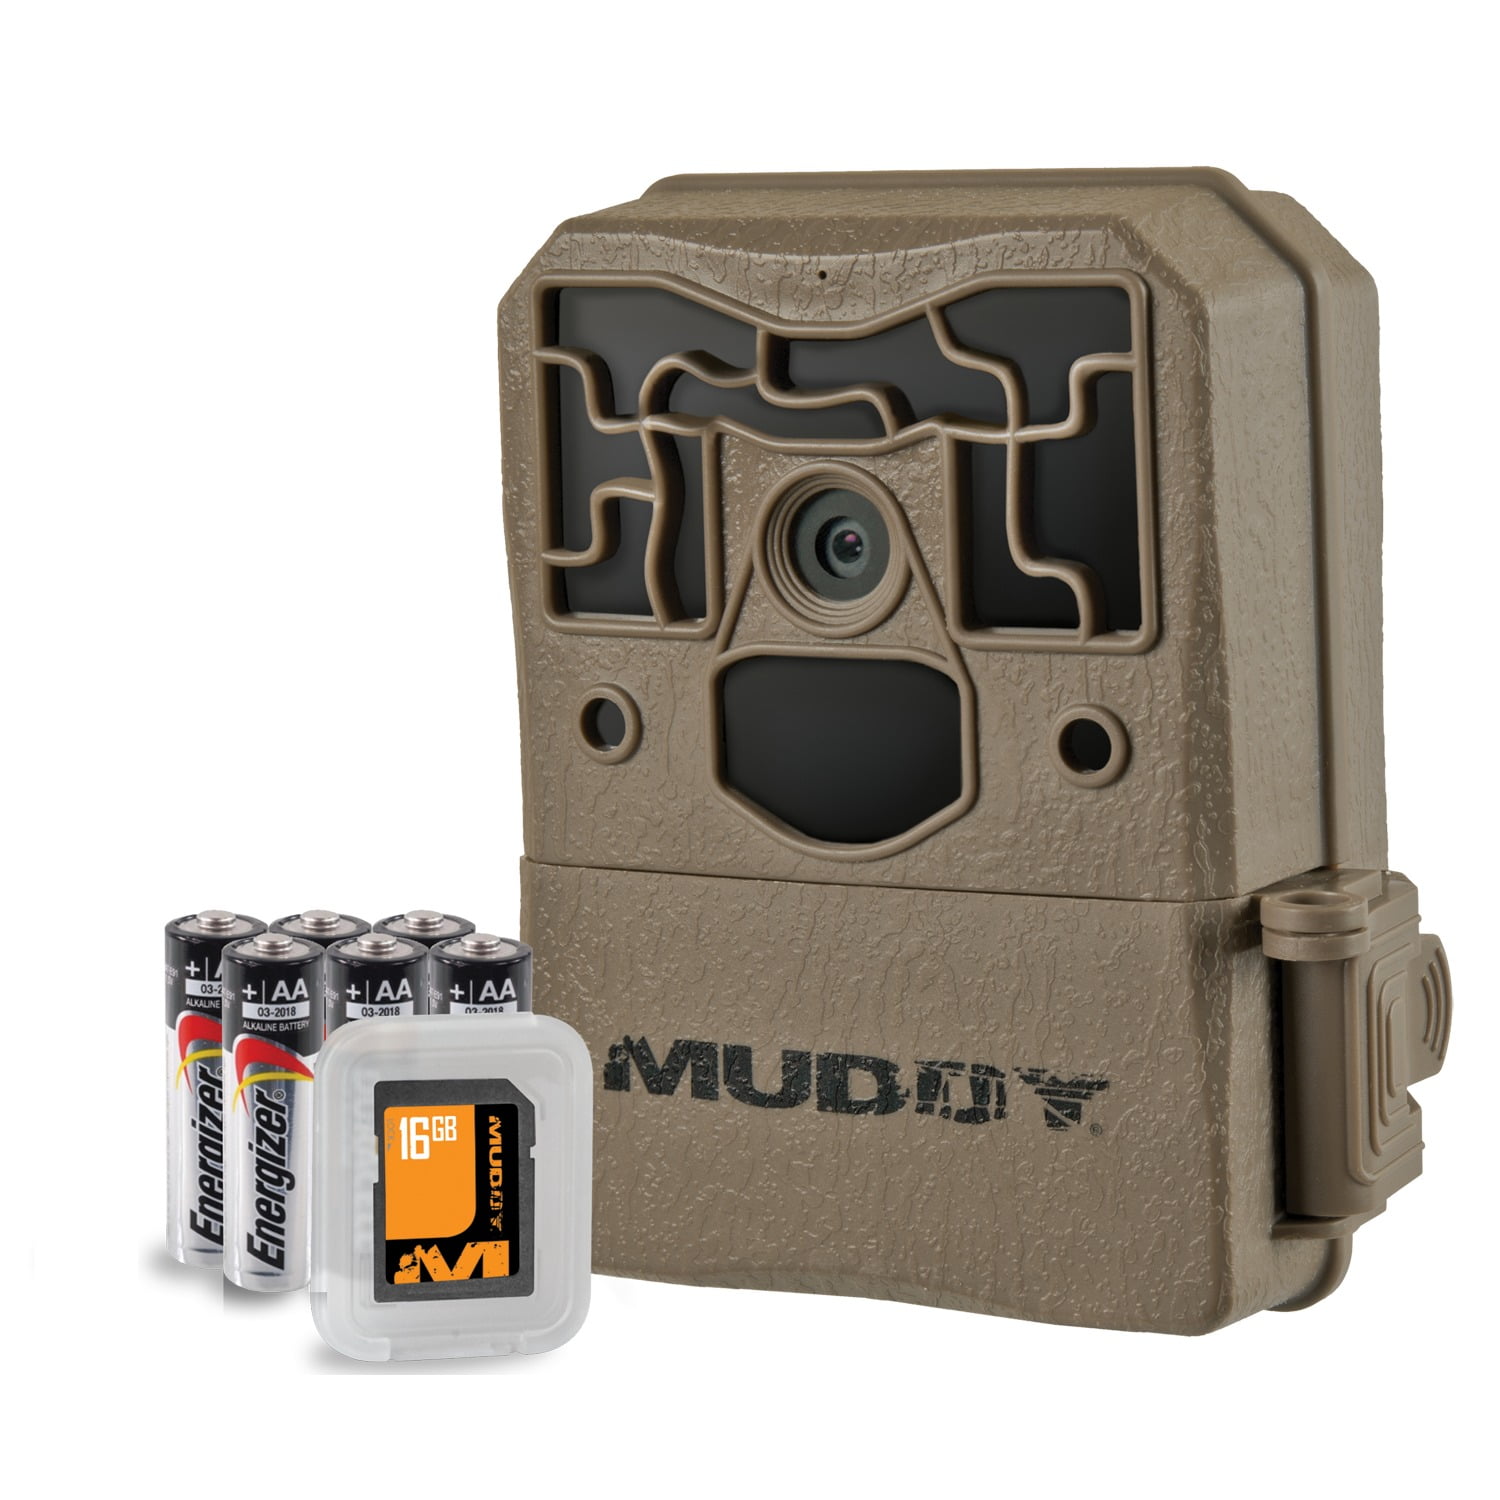 Muddy Pro-Cam 20 Trail Camera Bundle MTC600-K 